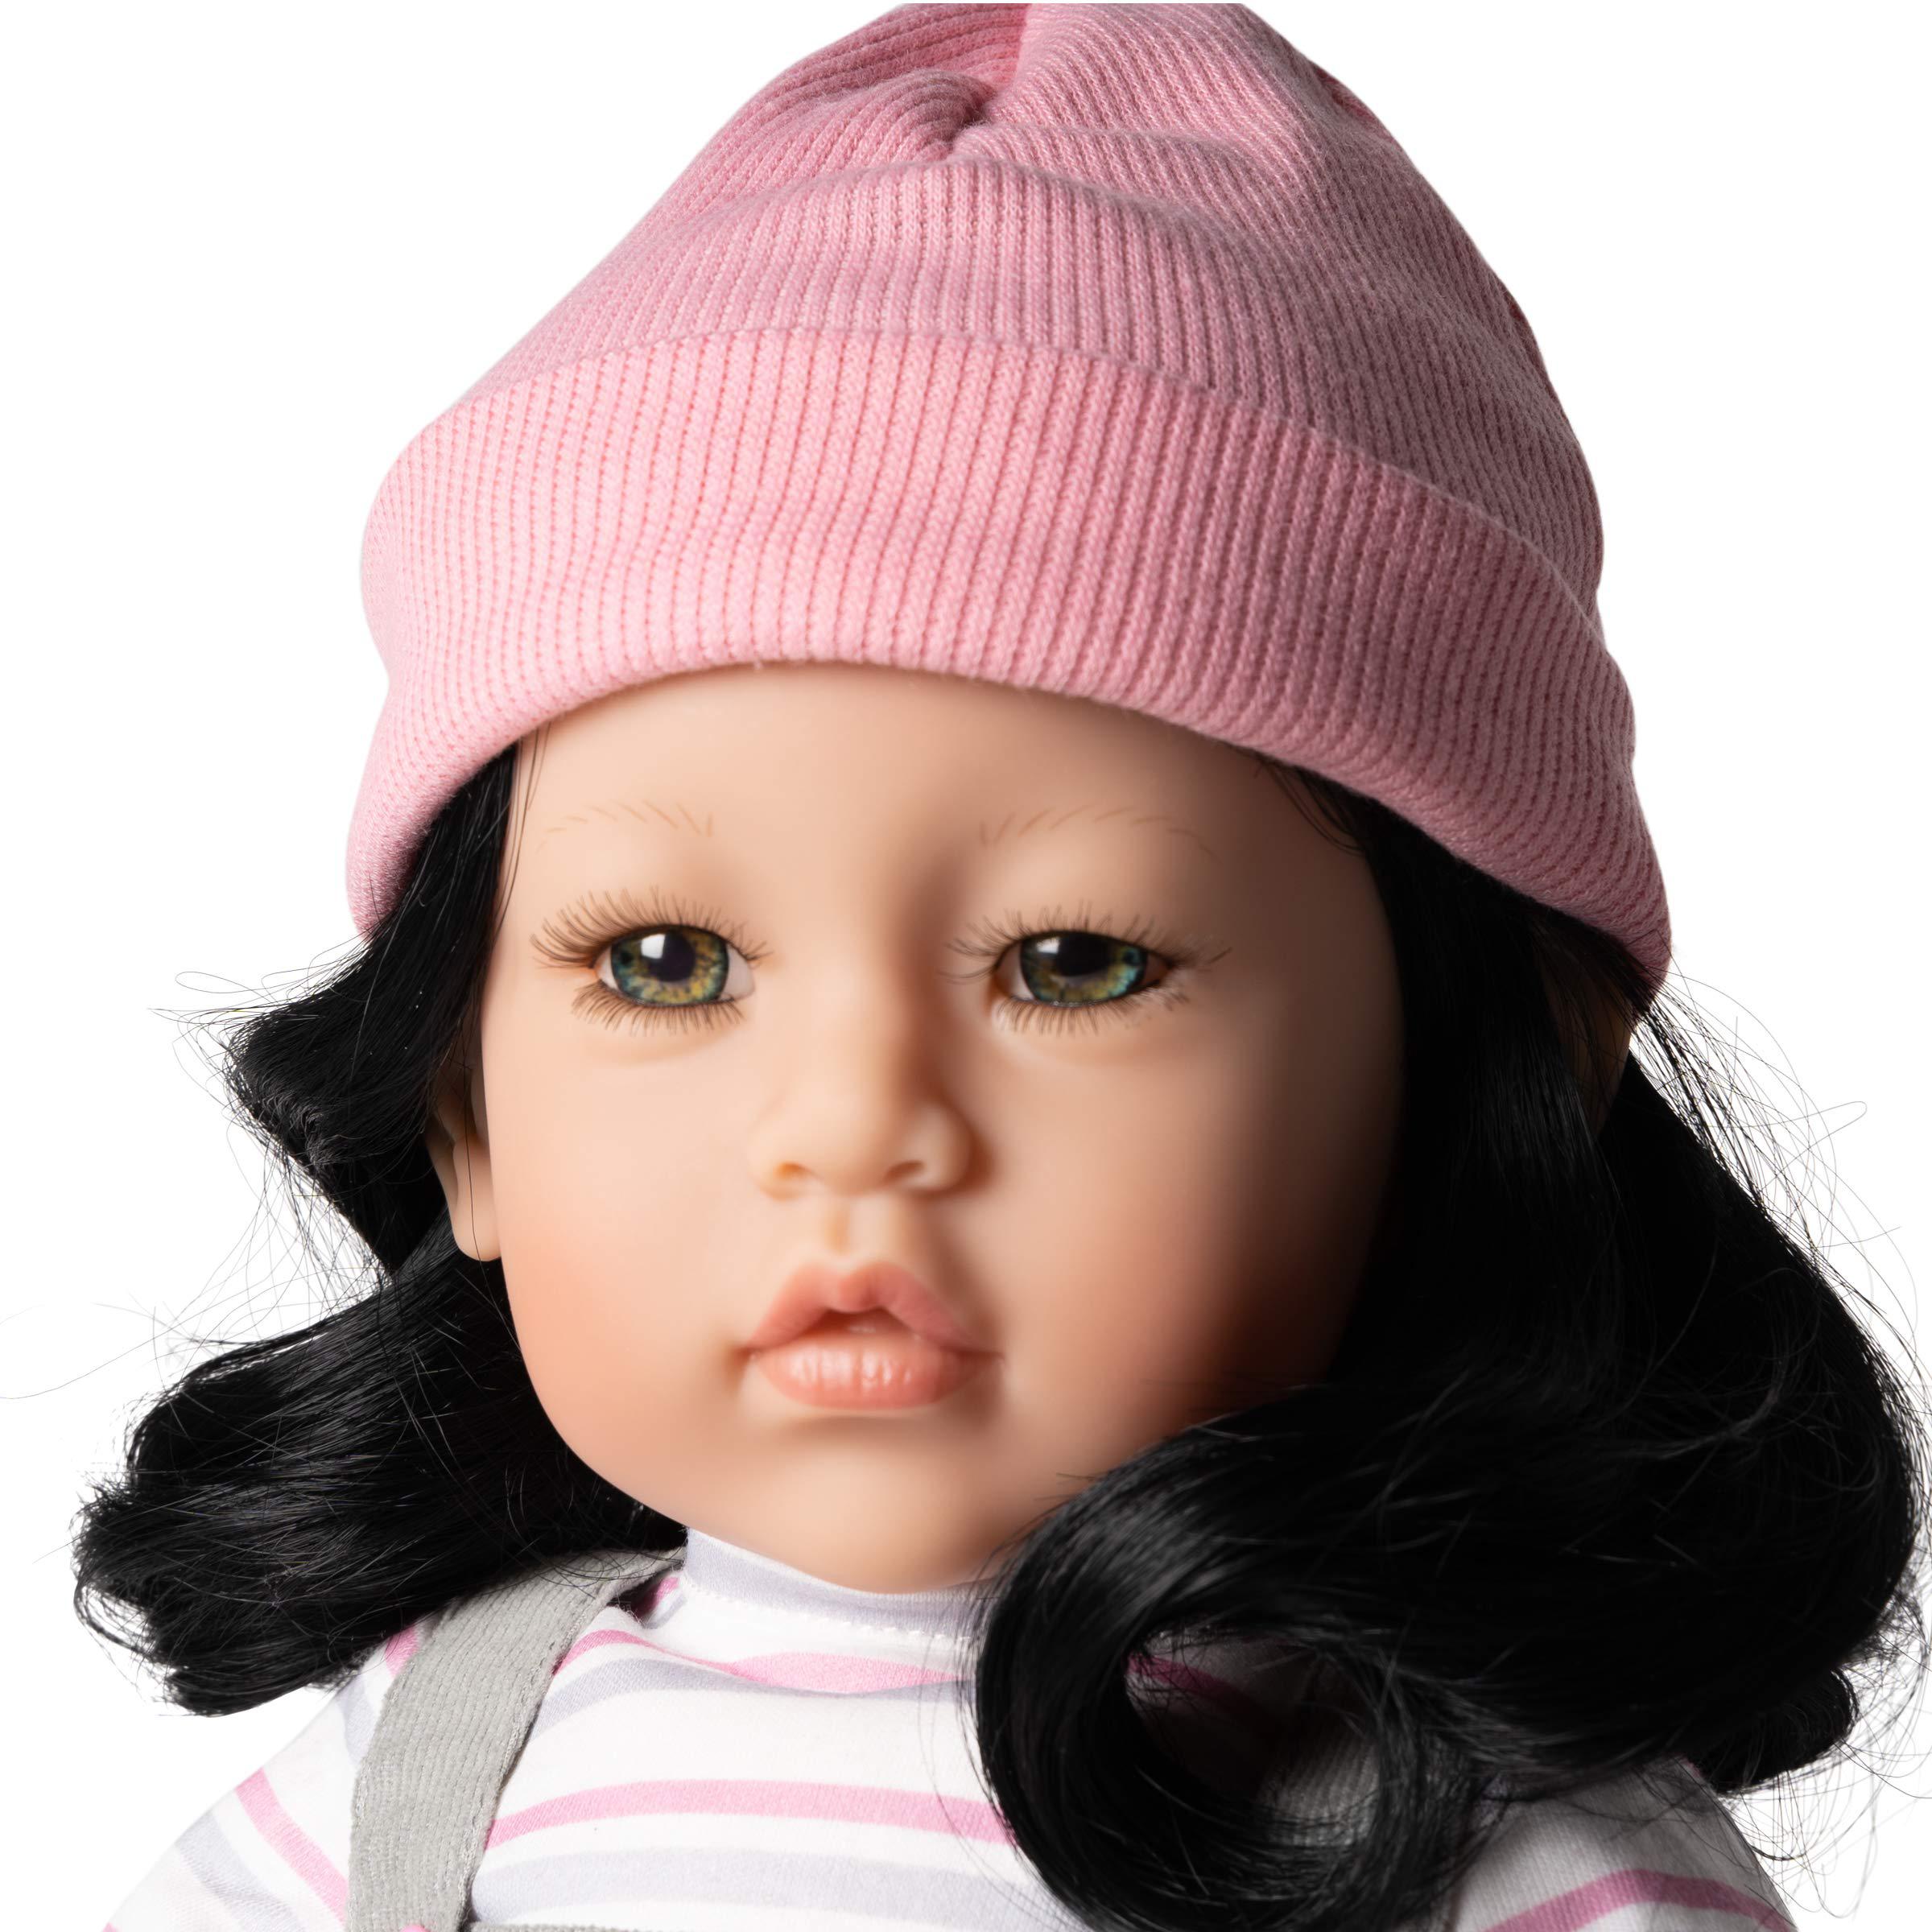 Adora Dolls adora realistic baby doll girl power toddler doll - 20 inch, soft cuddleme vinyl, brown hair, brown eyes